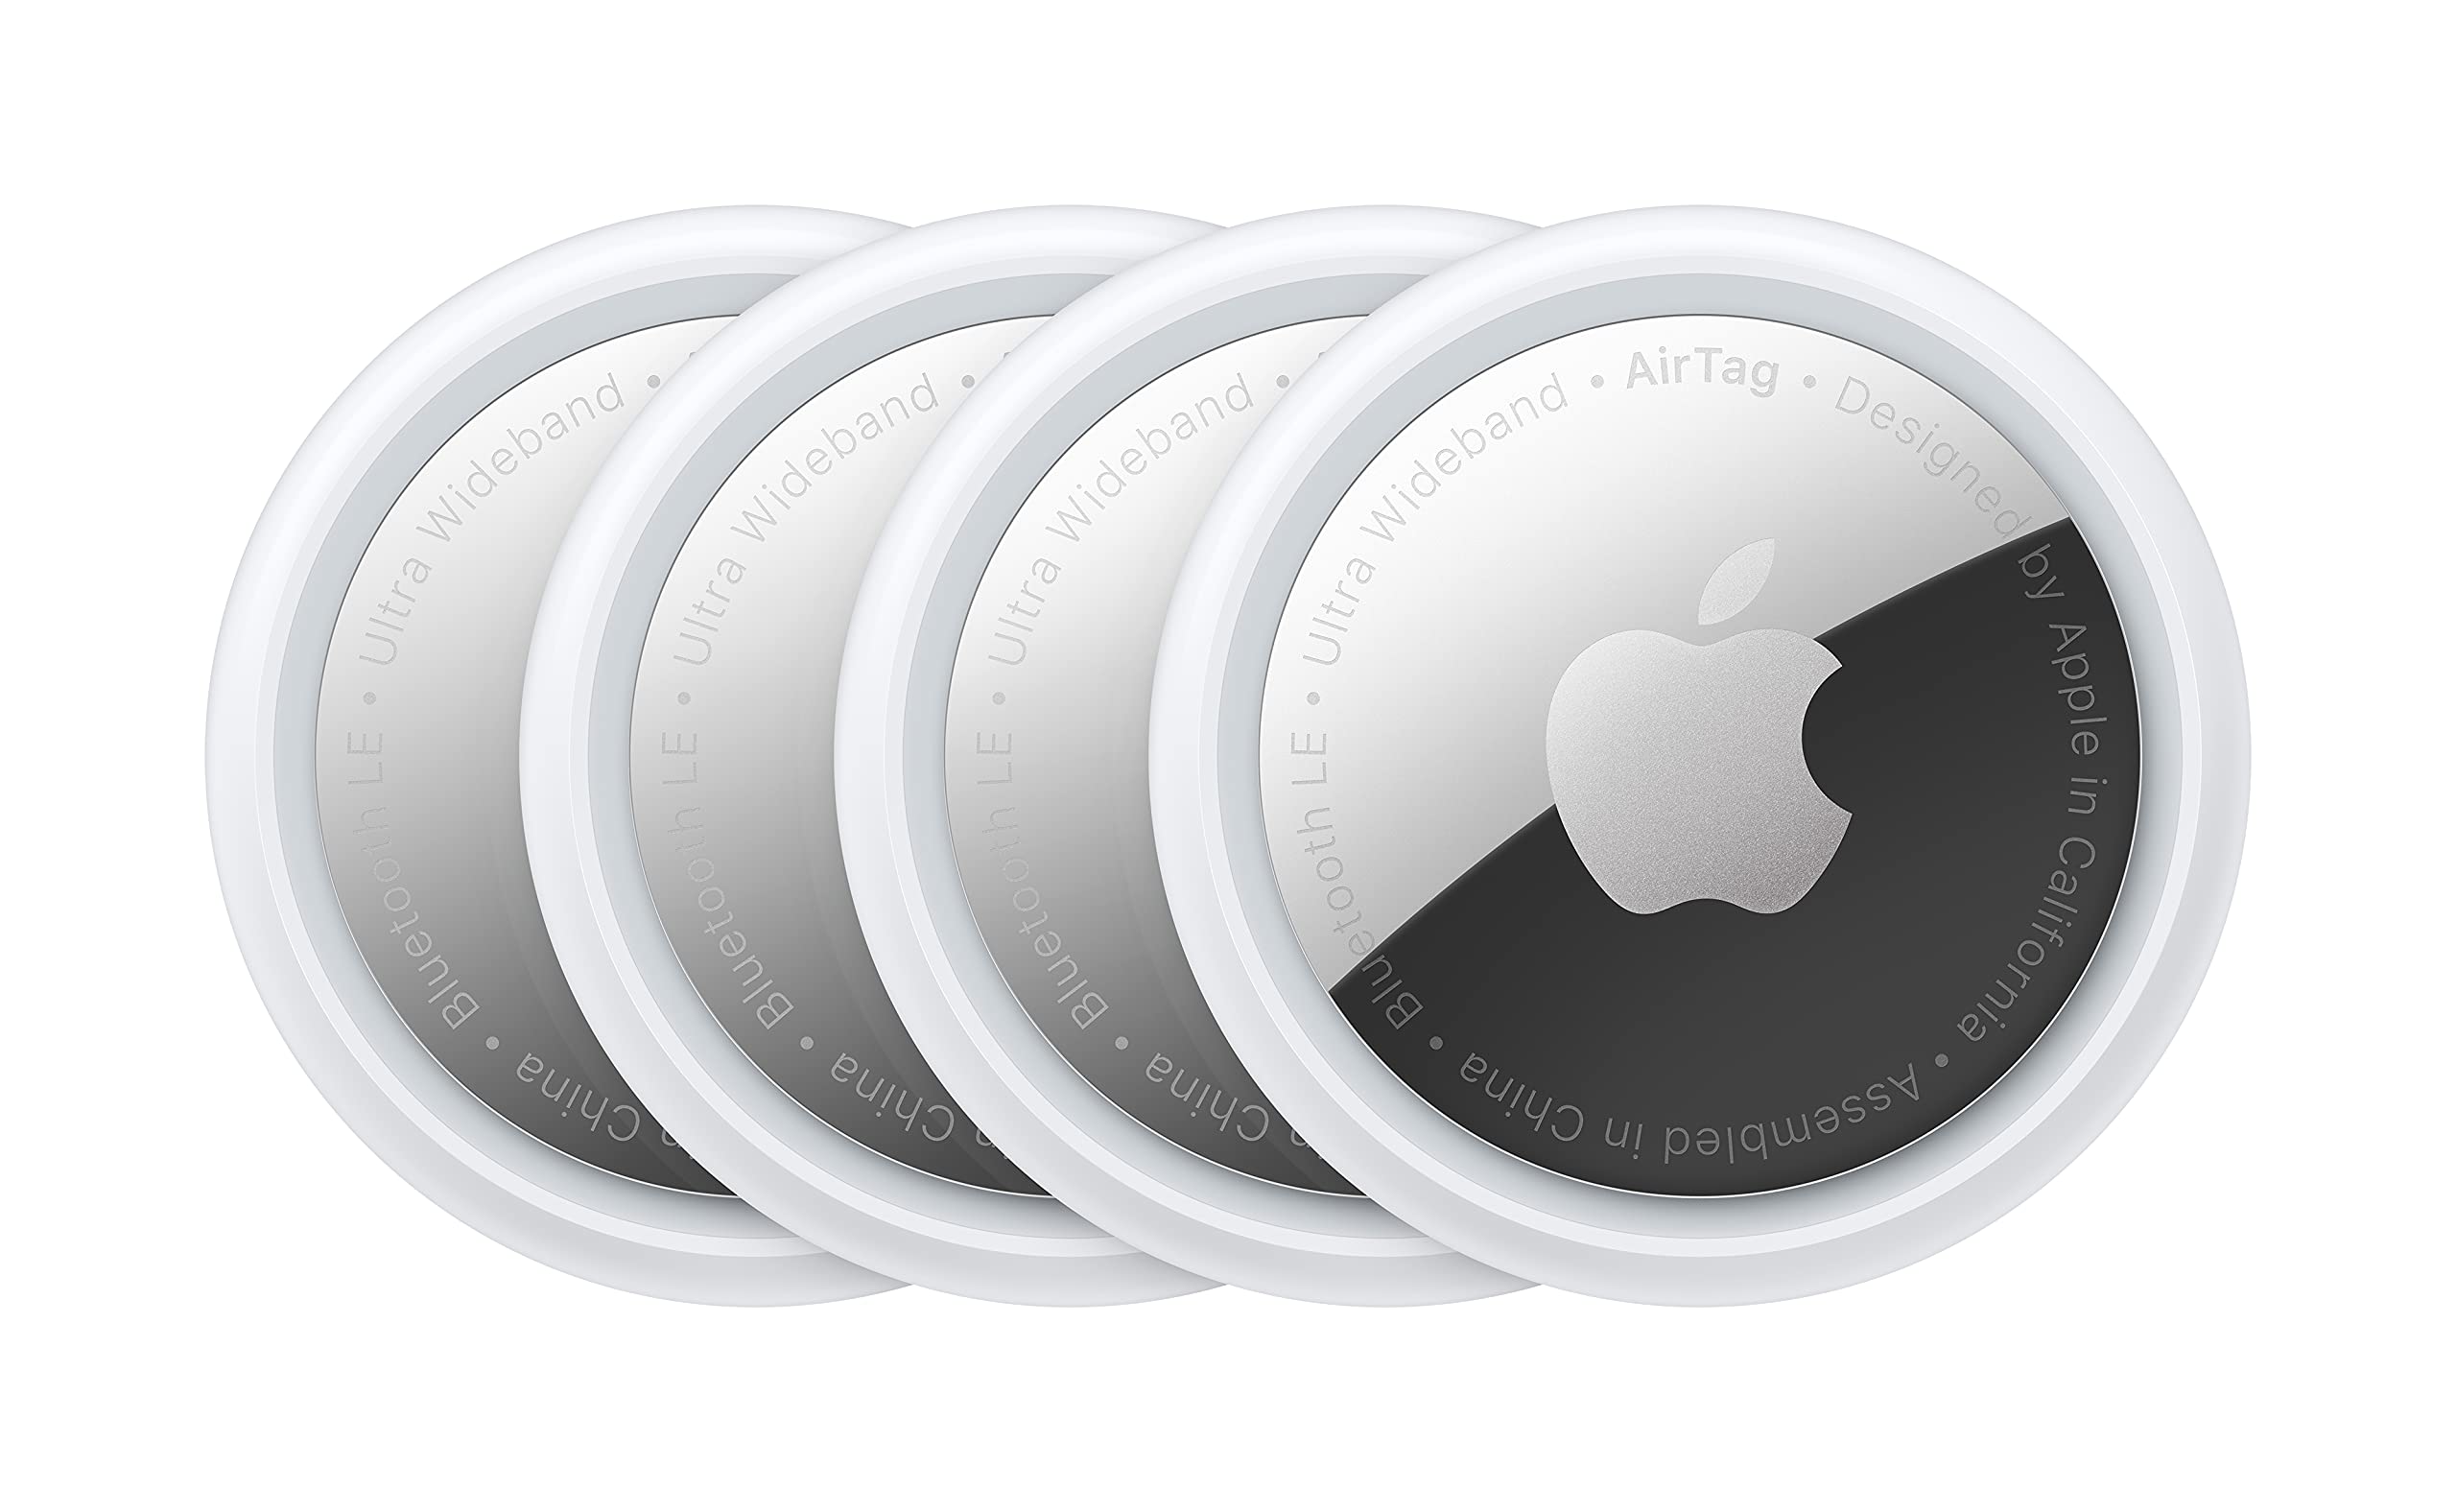 Apple एयरटैग 4 पैक